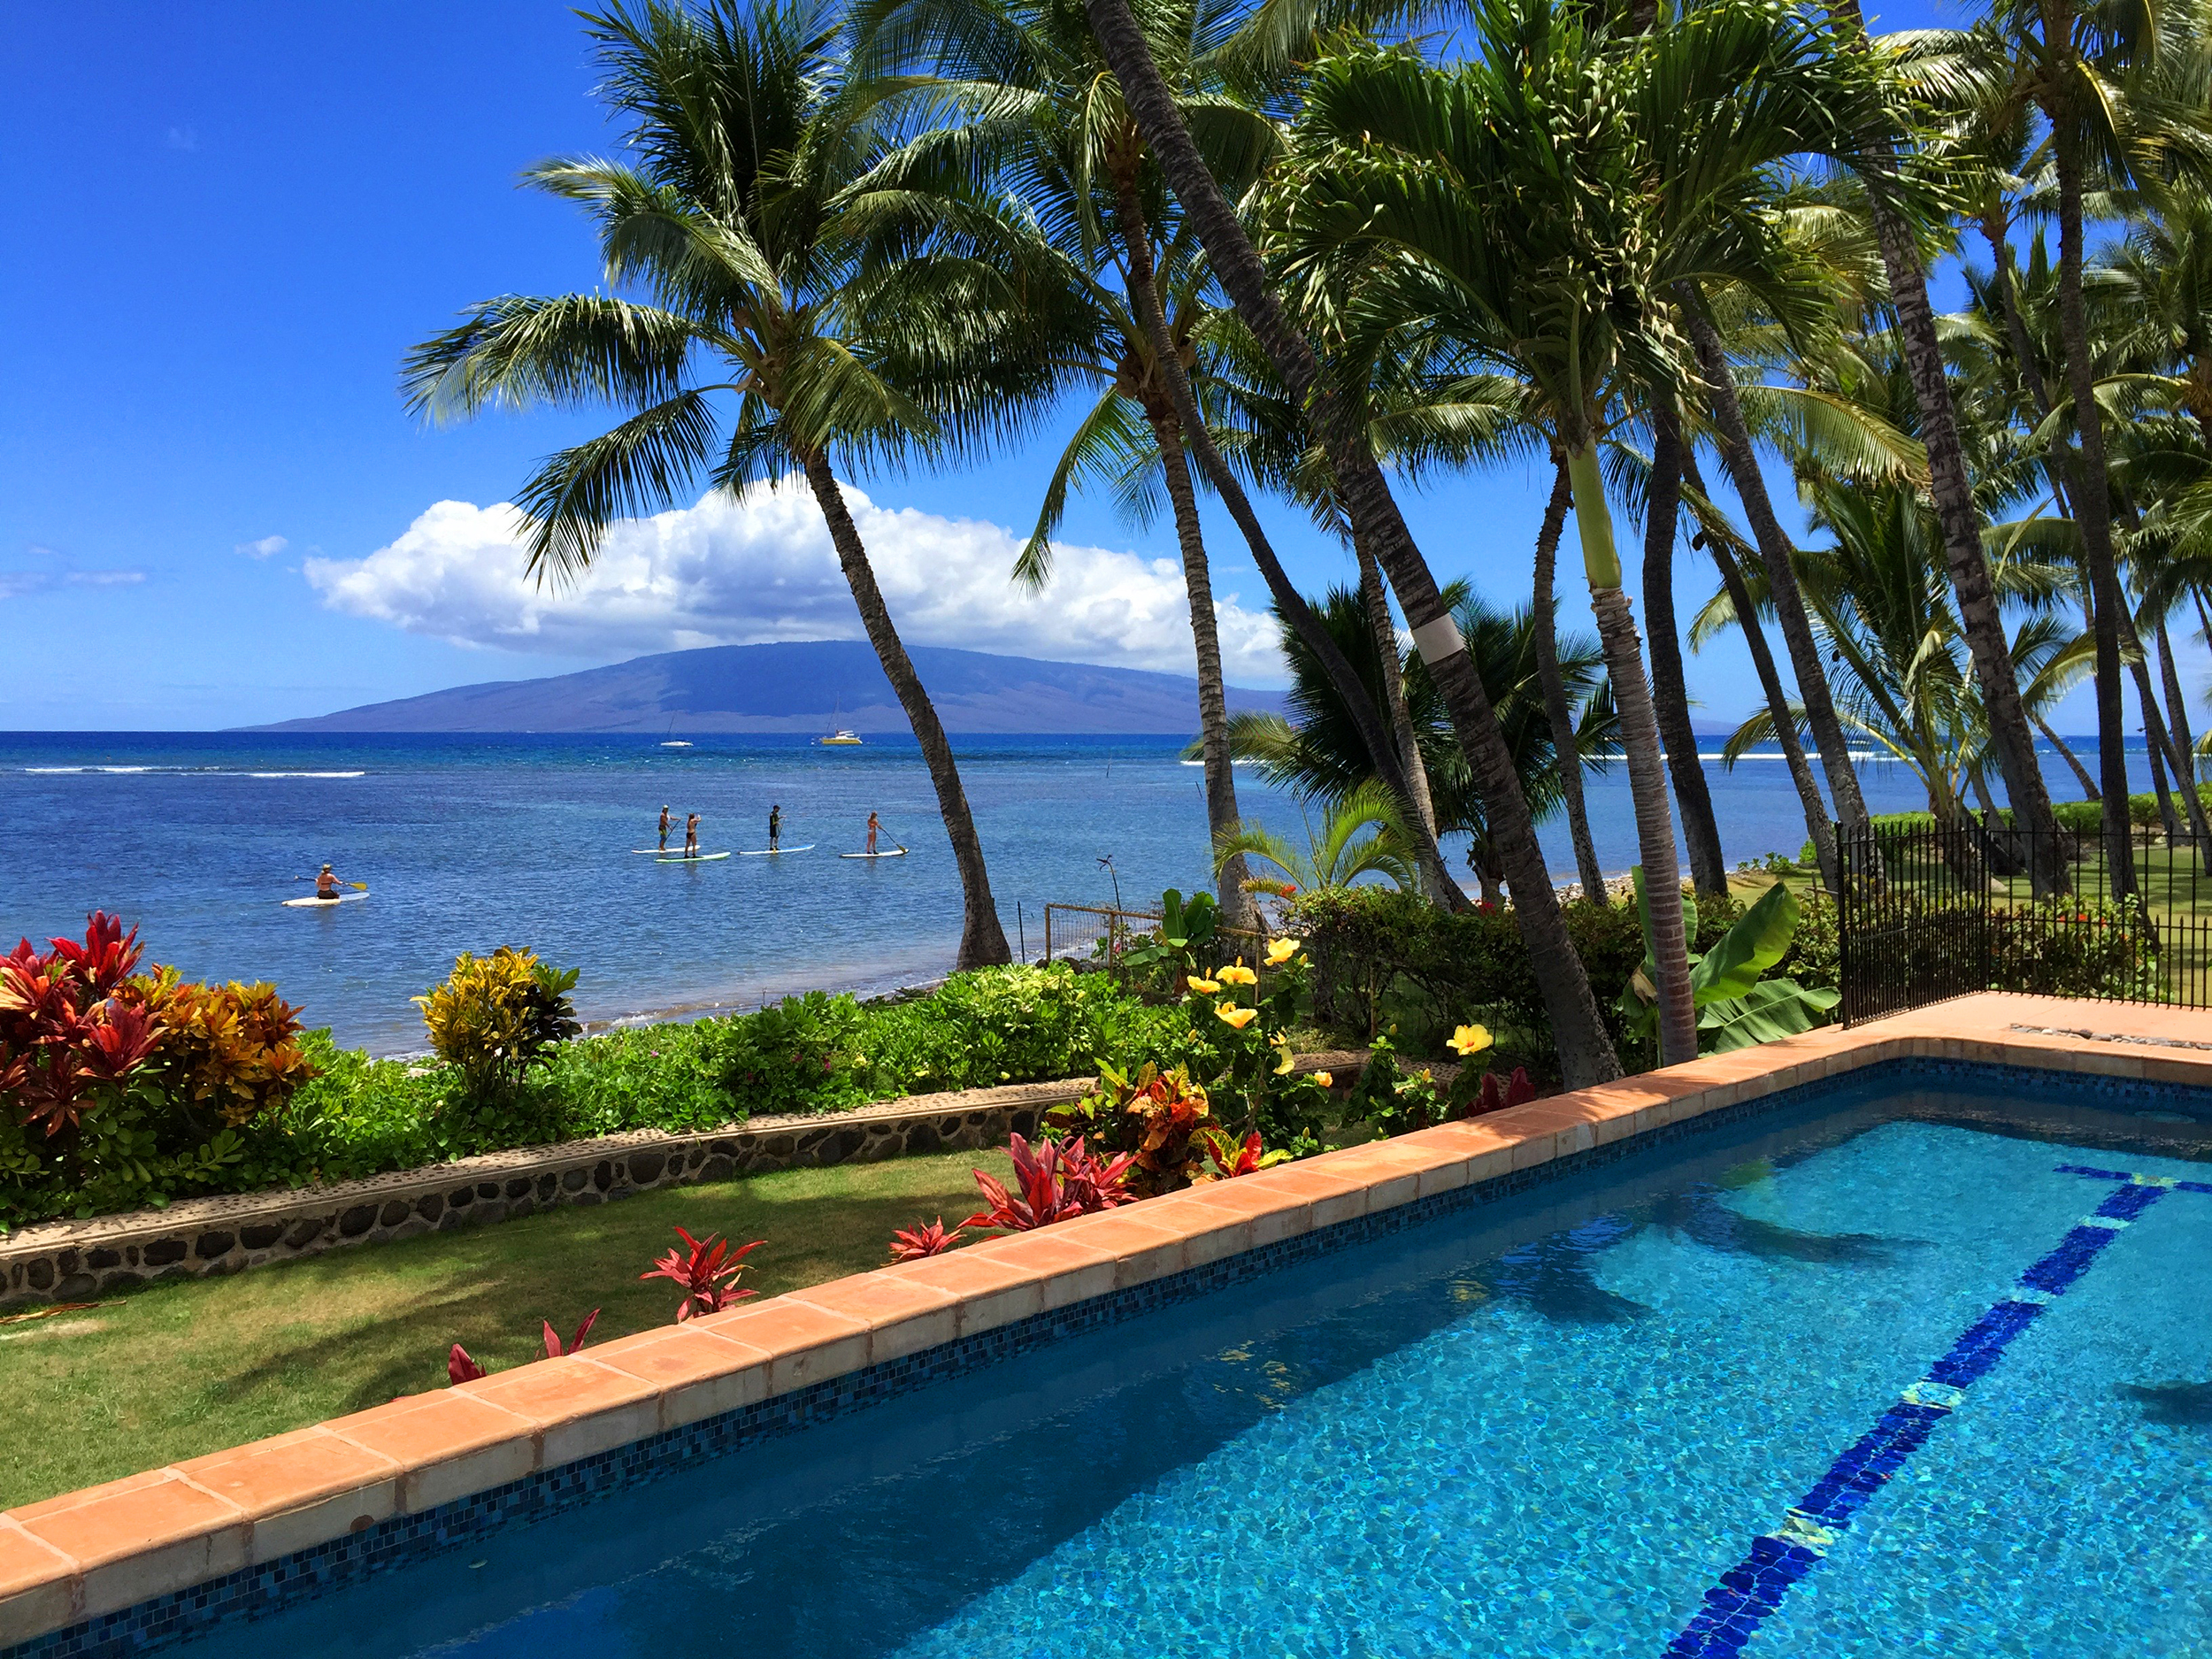 Paddle board dream in hawaii